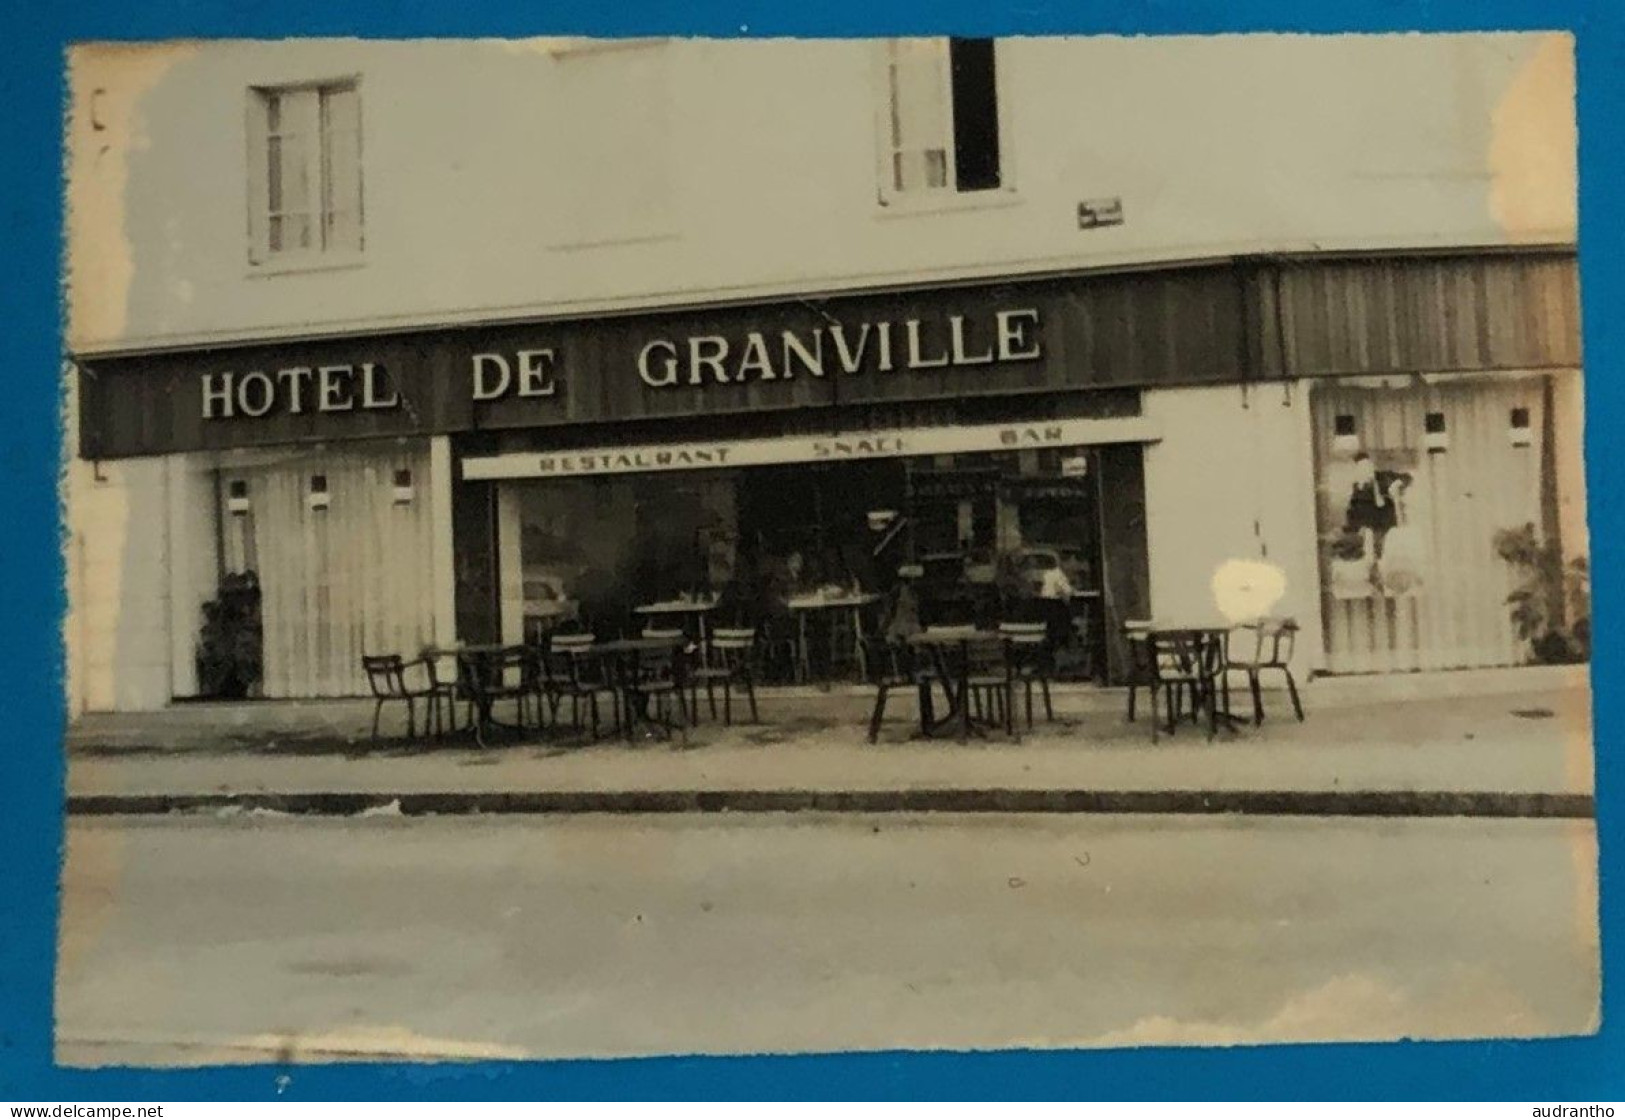 Ancien Cendrier Vide Poche En Verre HOTEL DE GRANVILLE Restaurant Snack Bar - Aschenbecher